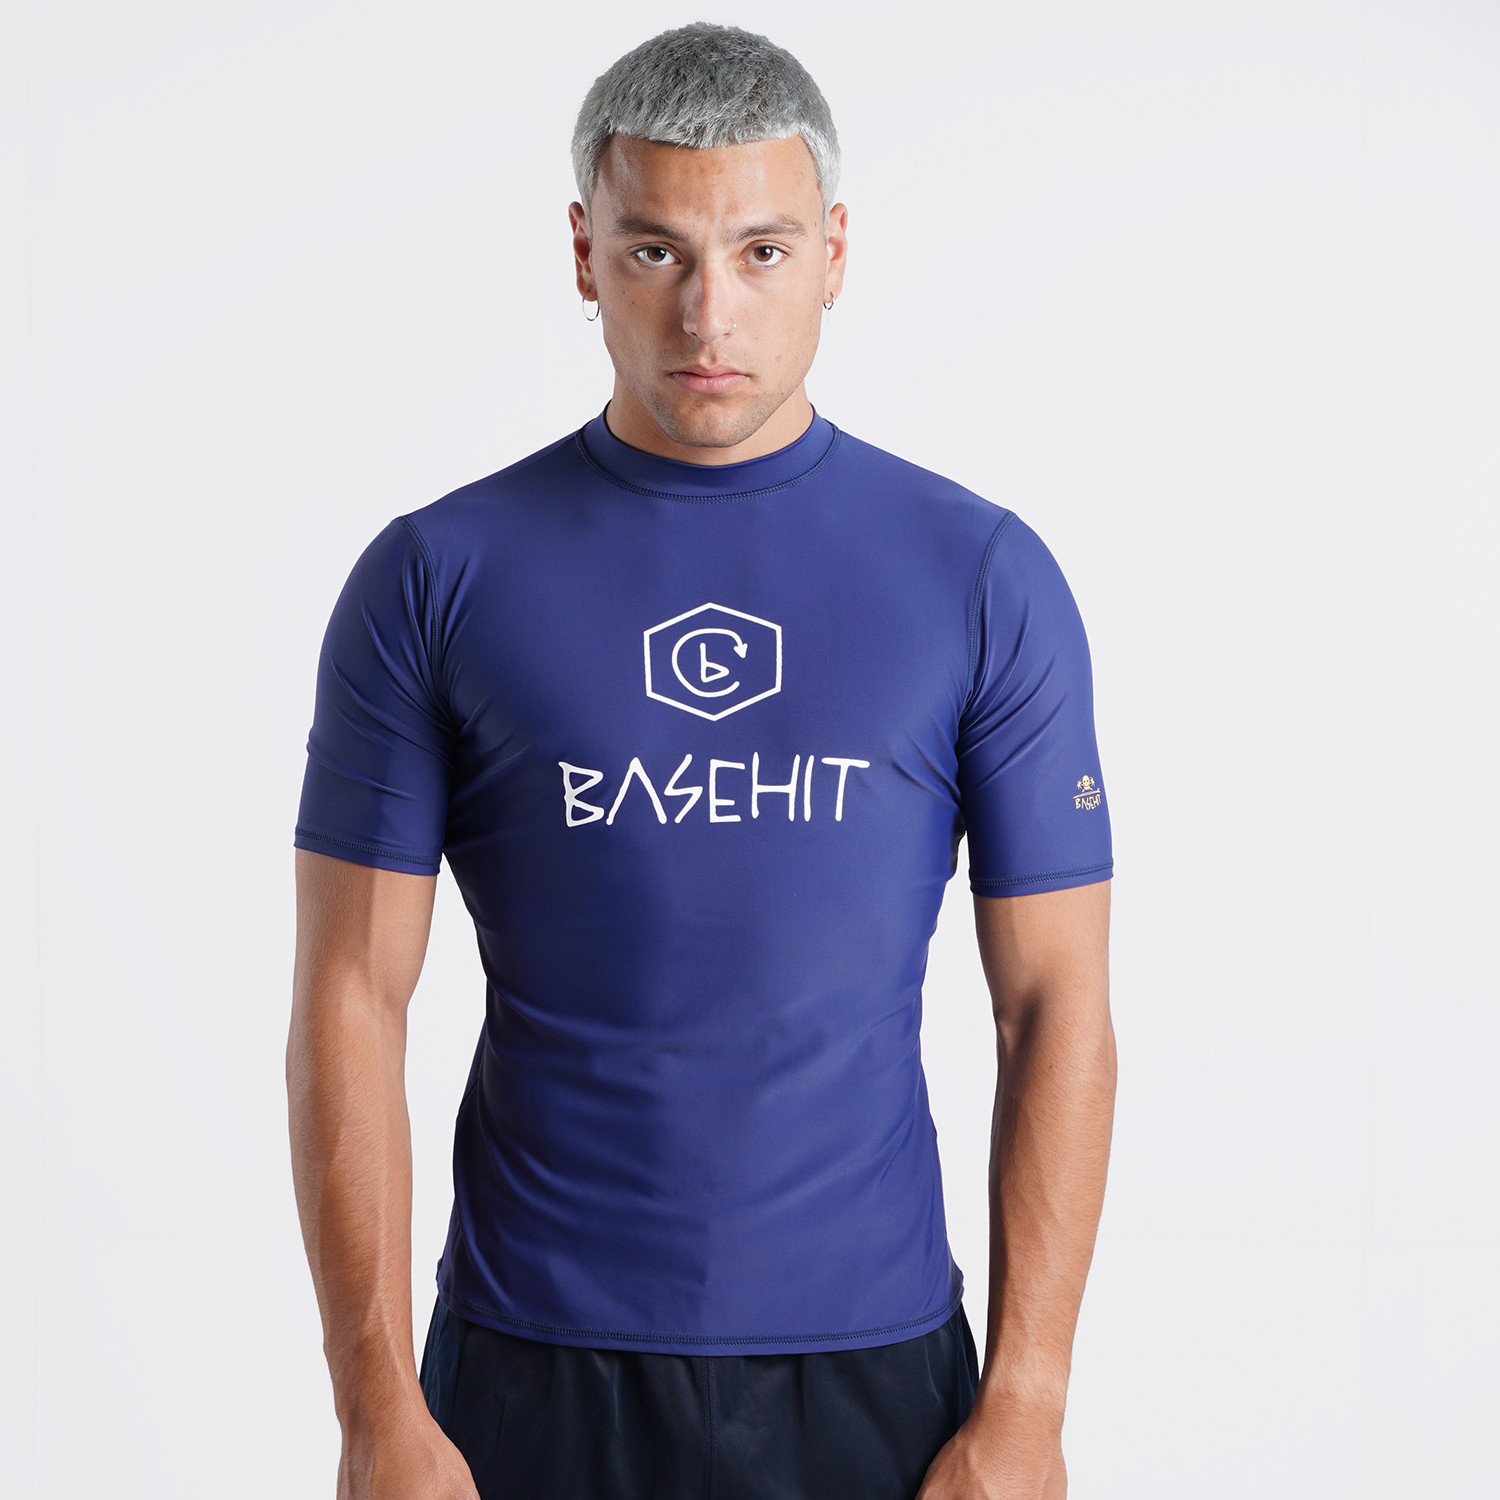 Basehit Rashguards Ανδρικό UV T-shirt (9000050901_1629)